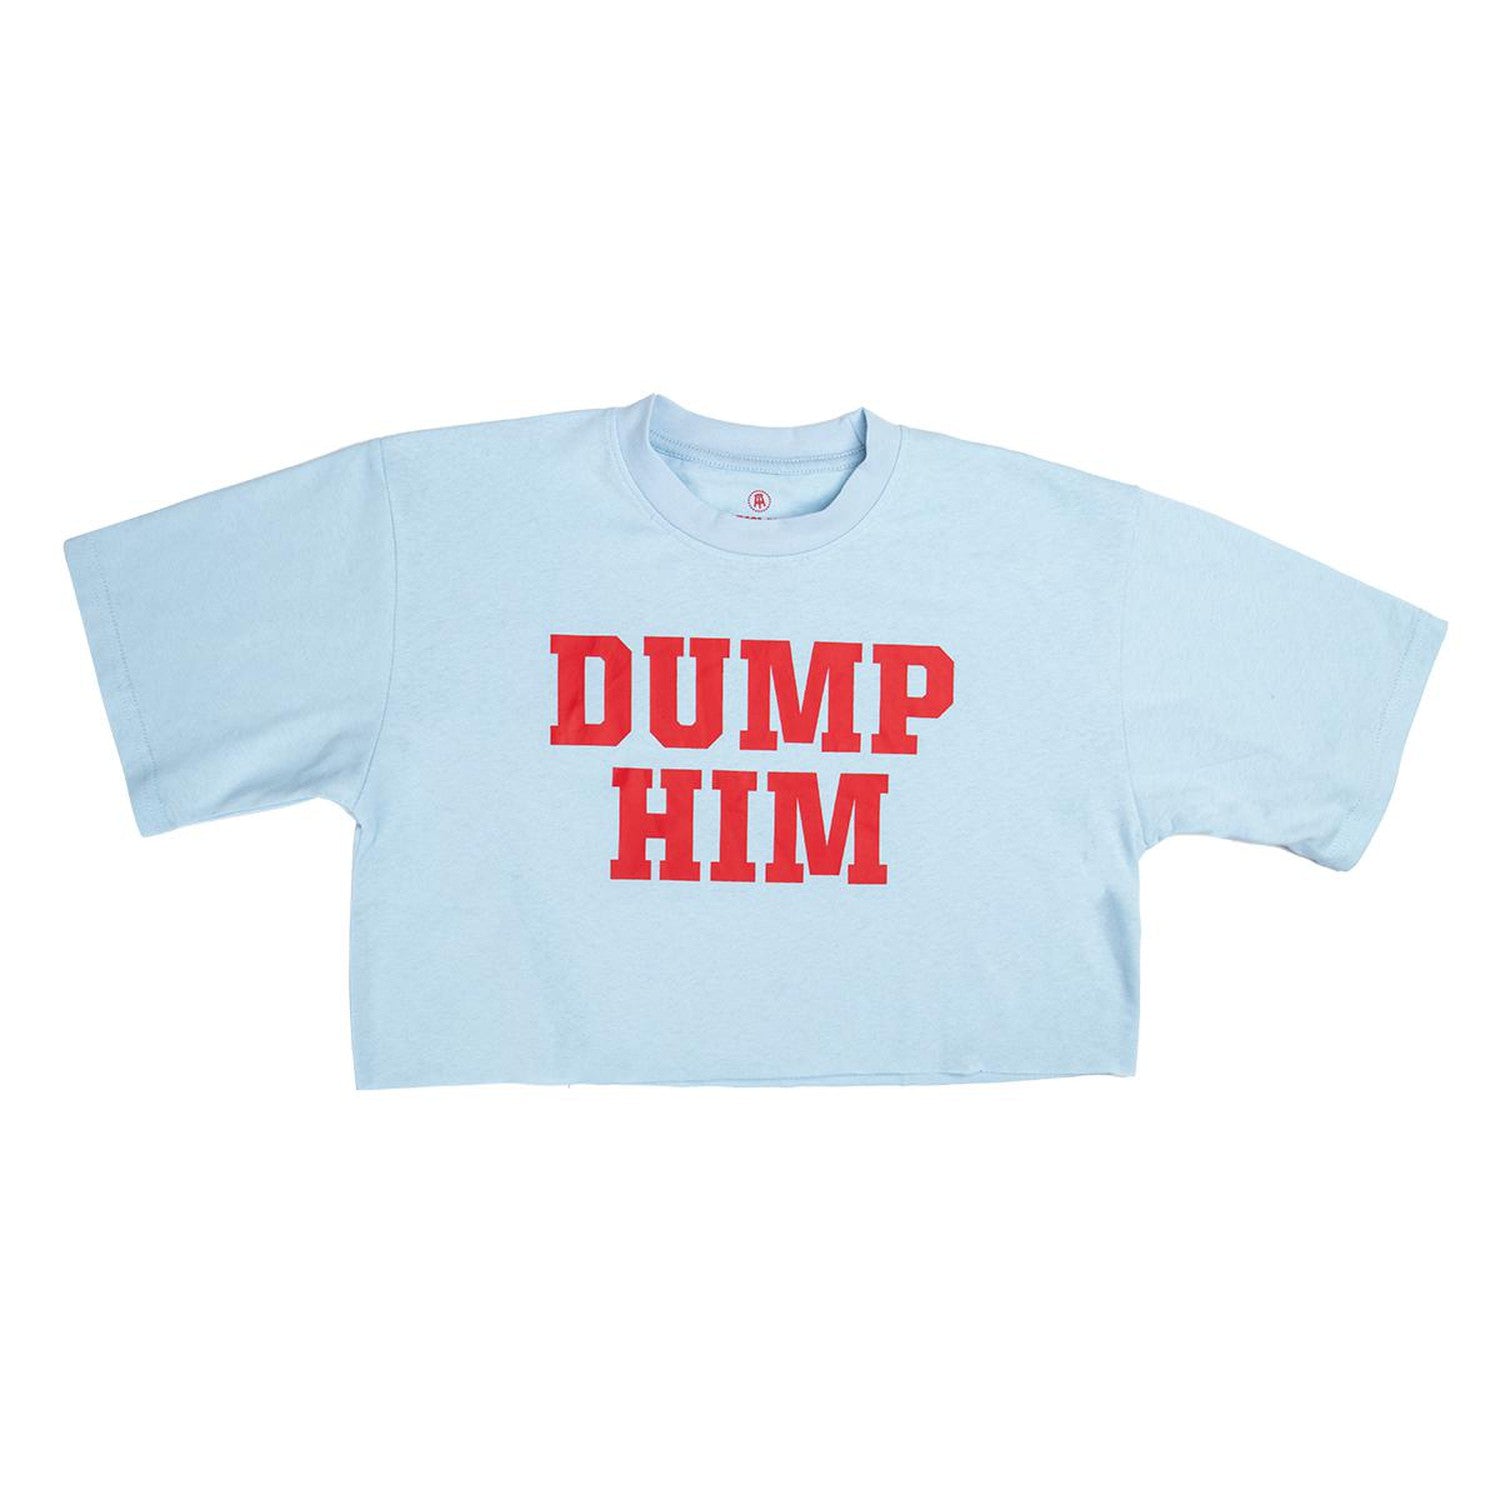 Call her daddy. Dump him. Shirt,“Dump him. Футболка дамп хим. Топ без рукавов Dump him.